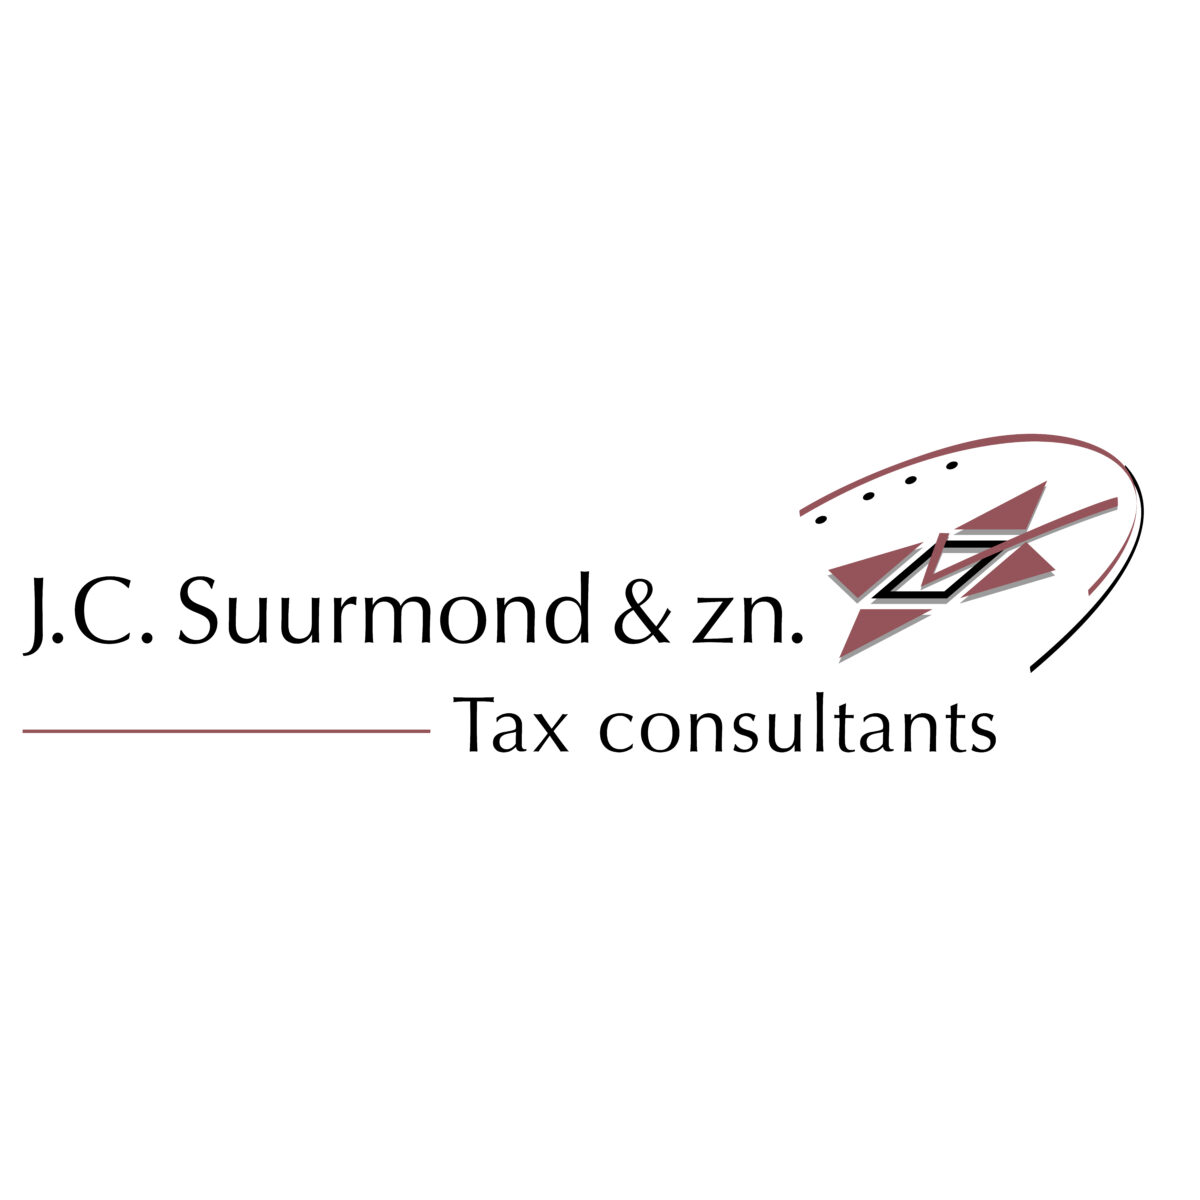 image-of-the-j-c-suurmond-tax-consultants-logo